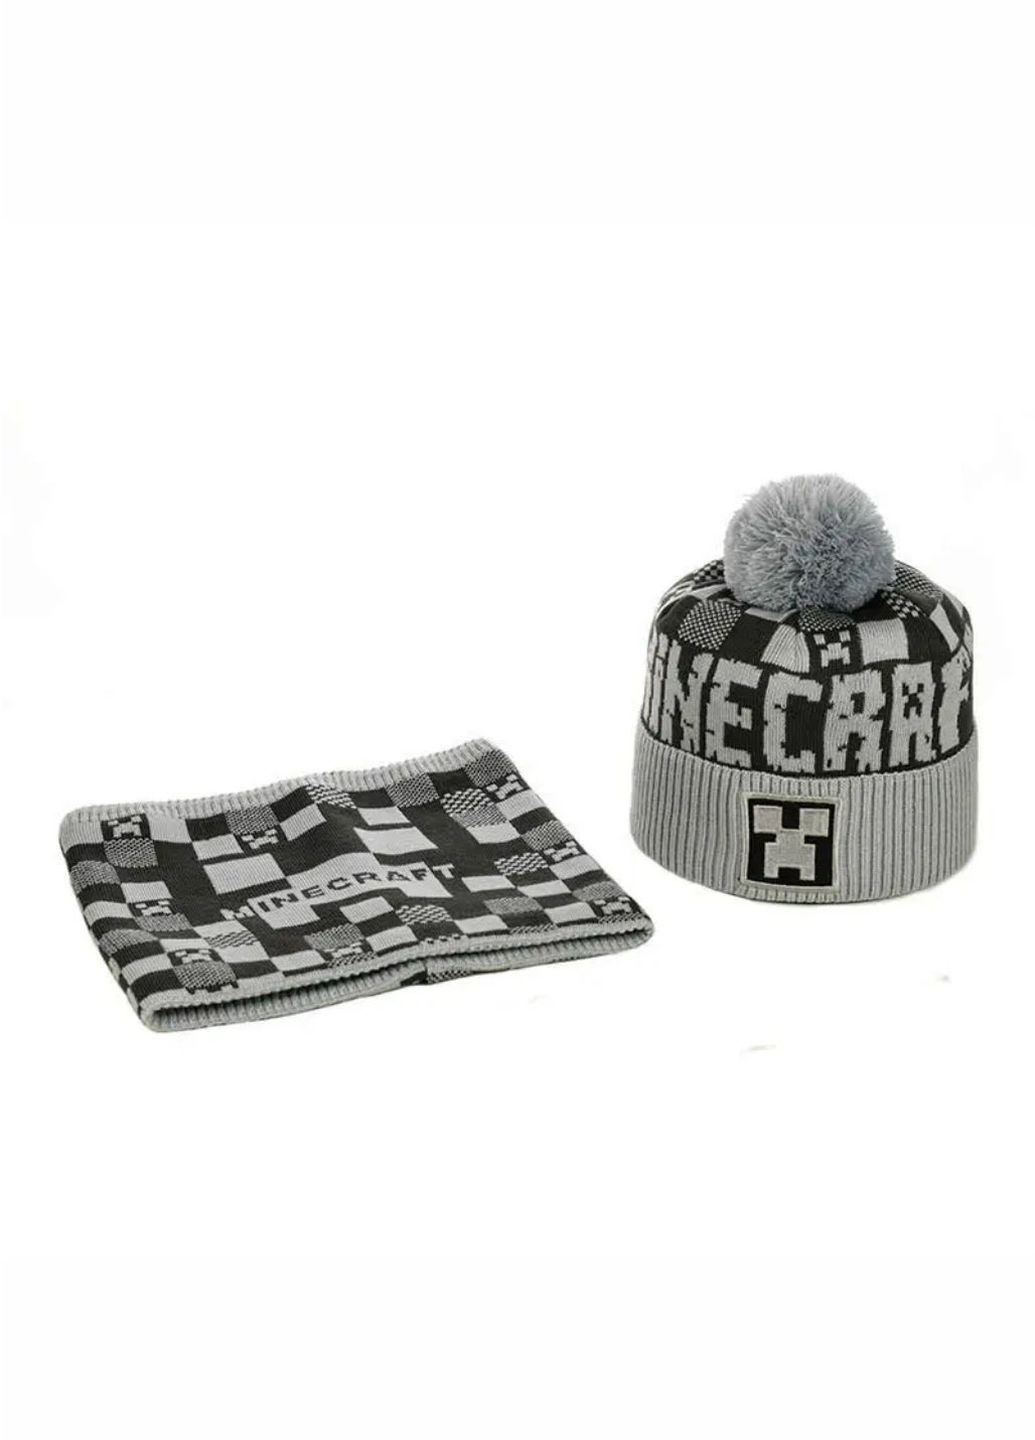 Детский зимний комплект шапка с помпоном + снуд Майнкрафт / Minecraft No Brand шапка с помпоном на флисе (270965914)